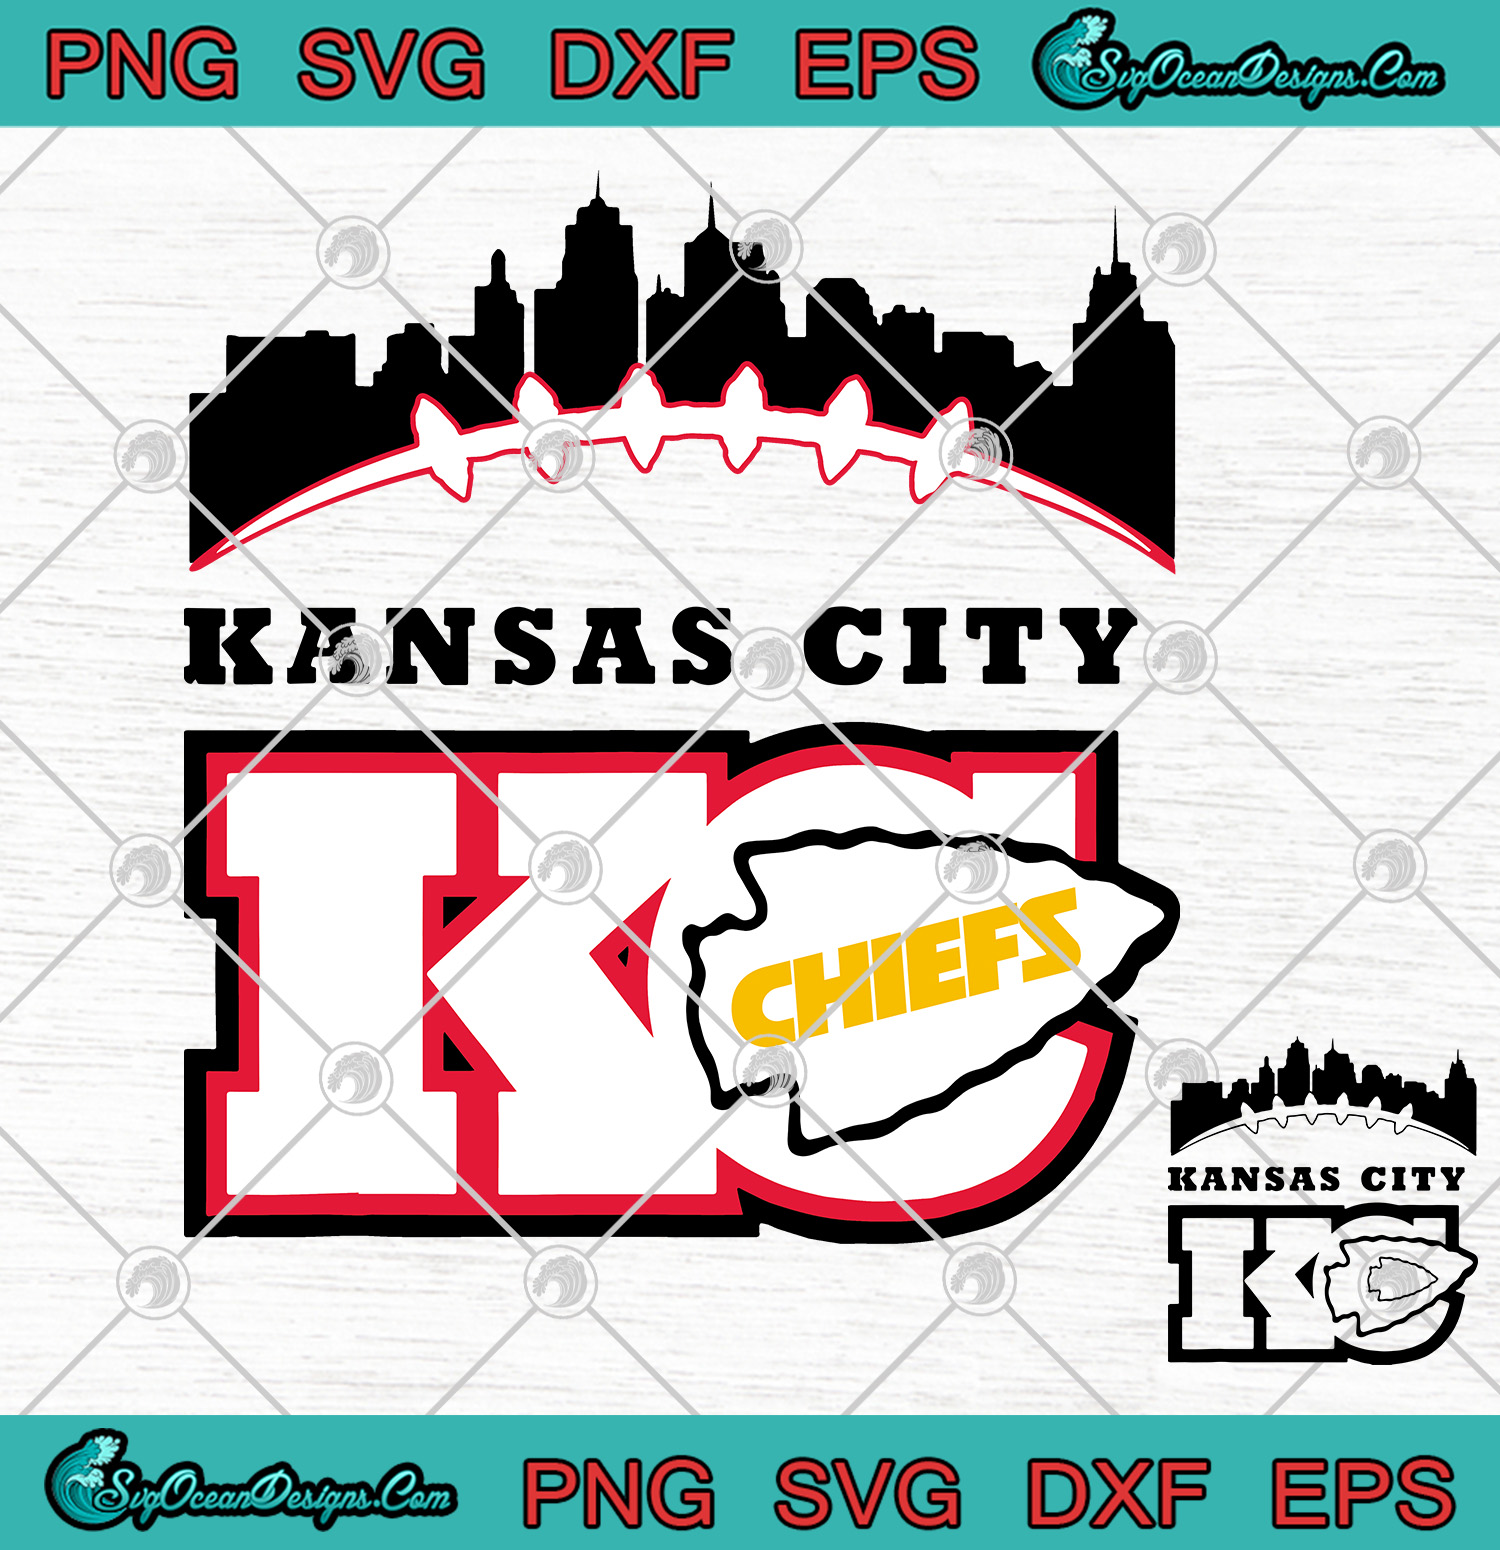 Download Kansas City Chief logo SVG PNG - Kansas City Football Fans SVG - Designs Digital Download